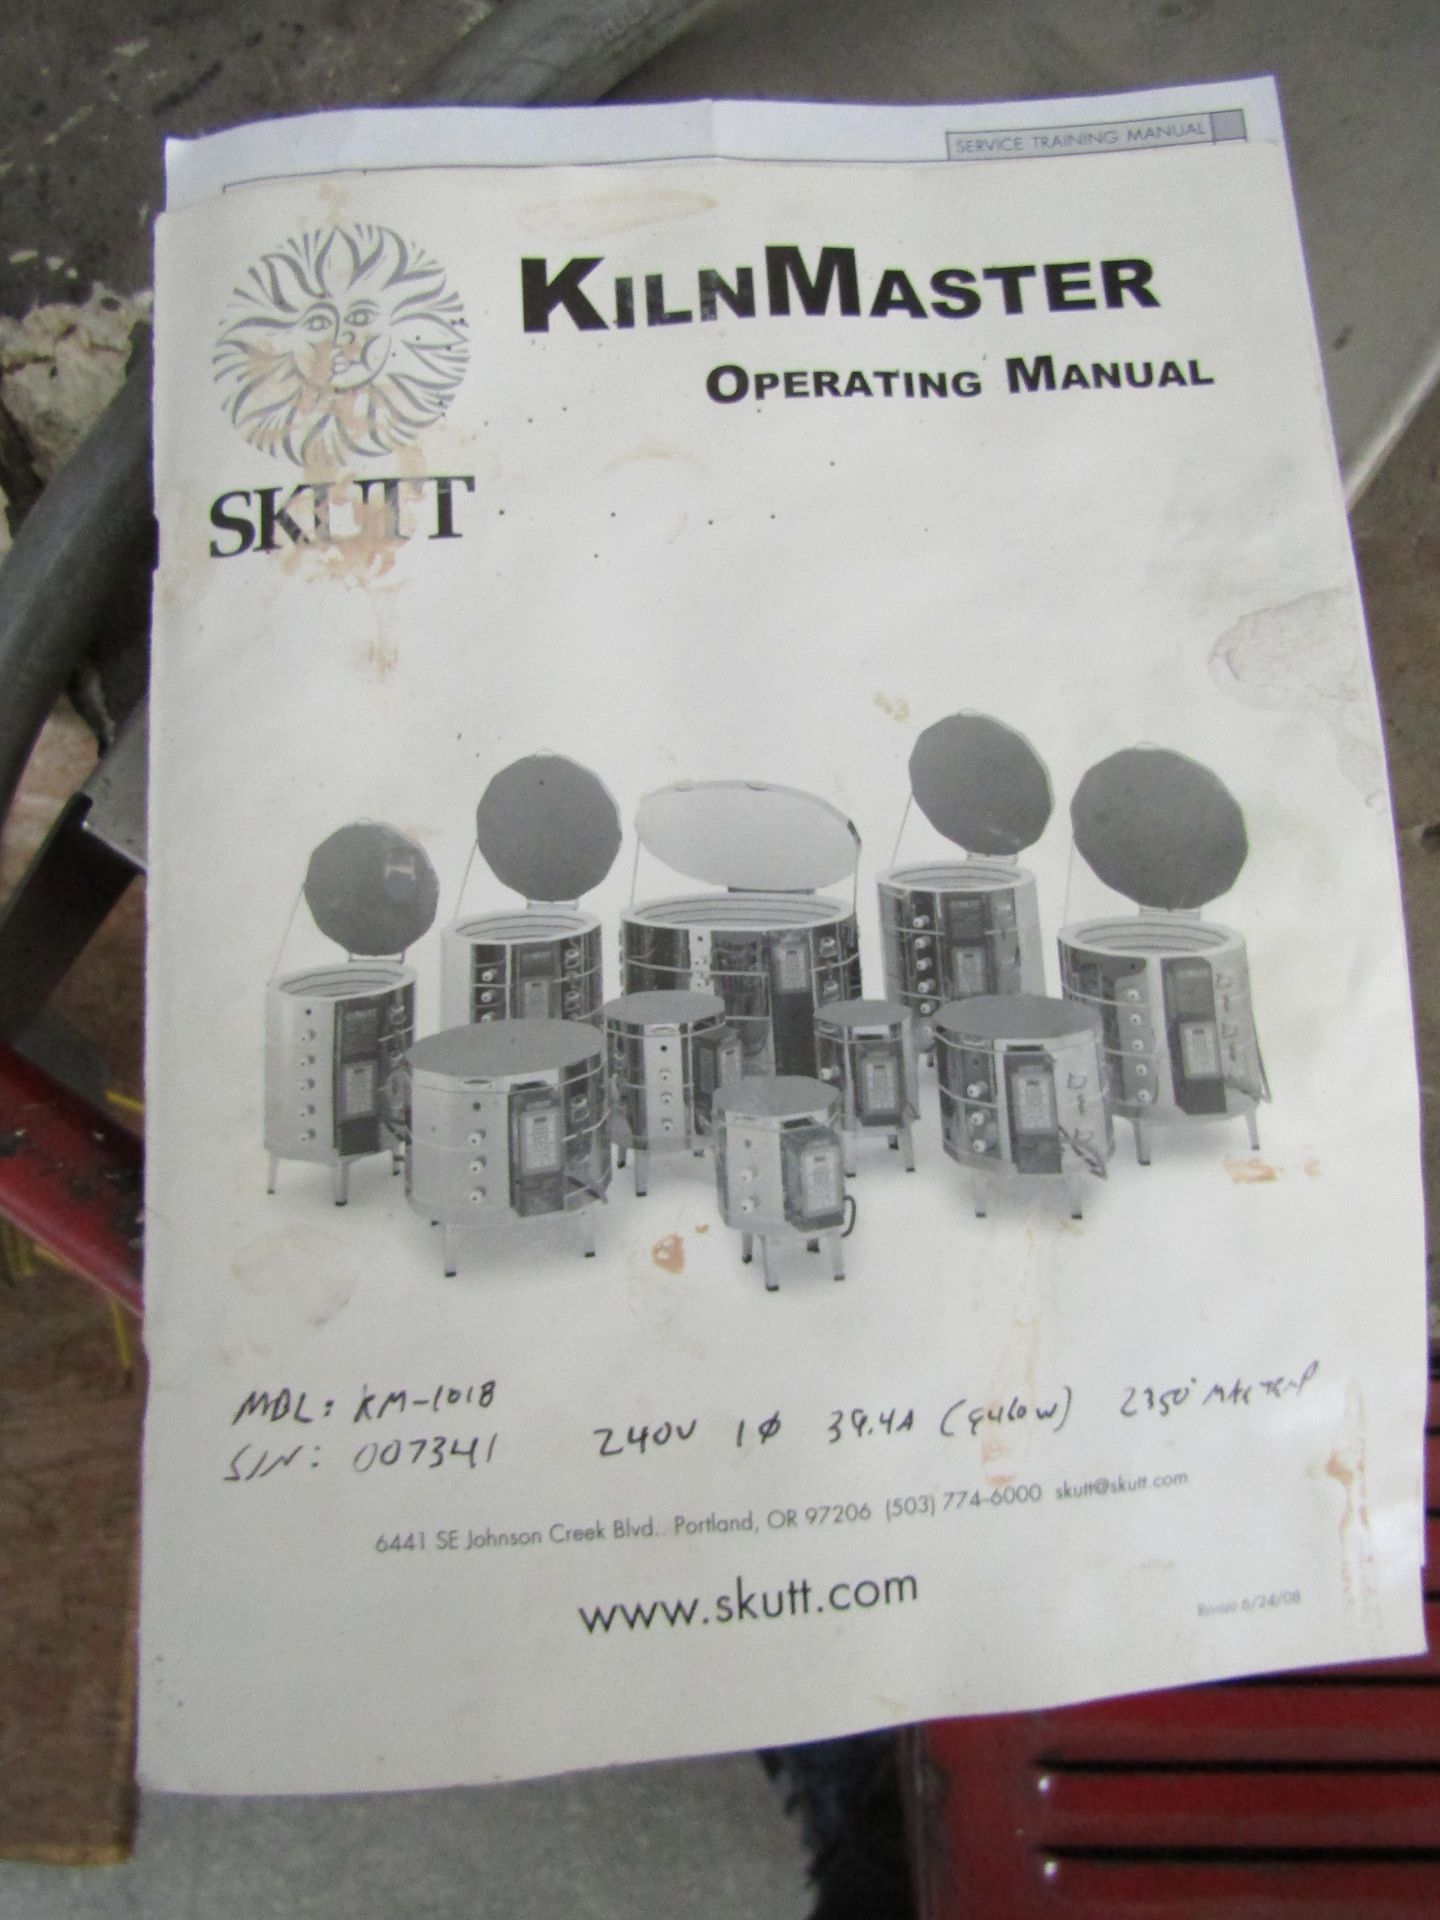 SKUTT Kiln Master KM-1018 Automatic Kiln, Serial 007341, 240 V, Operating Manual - Image 4 of 6